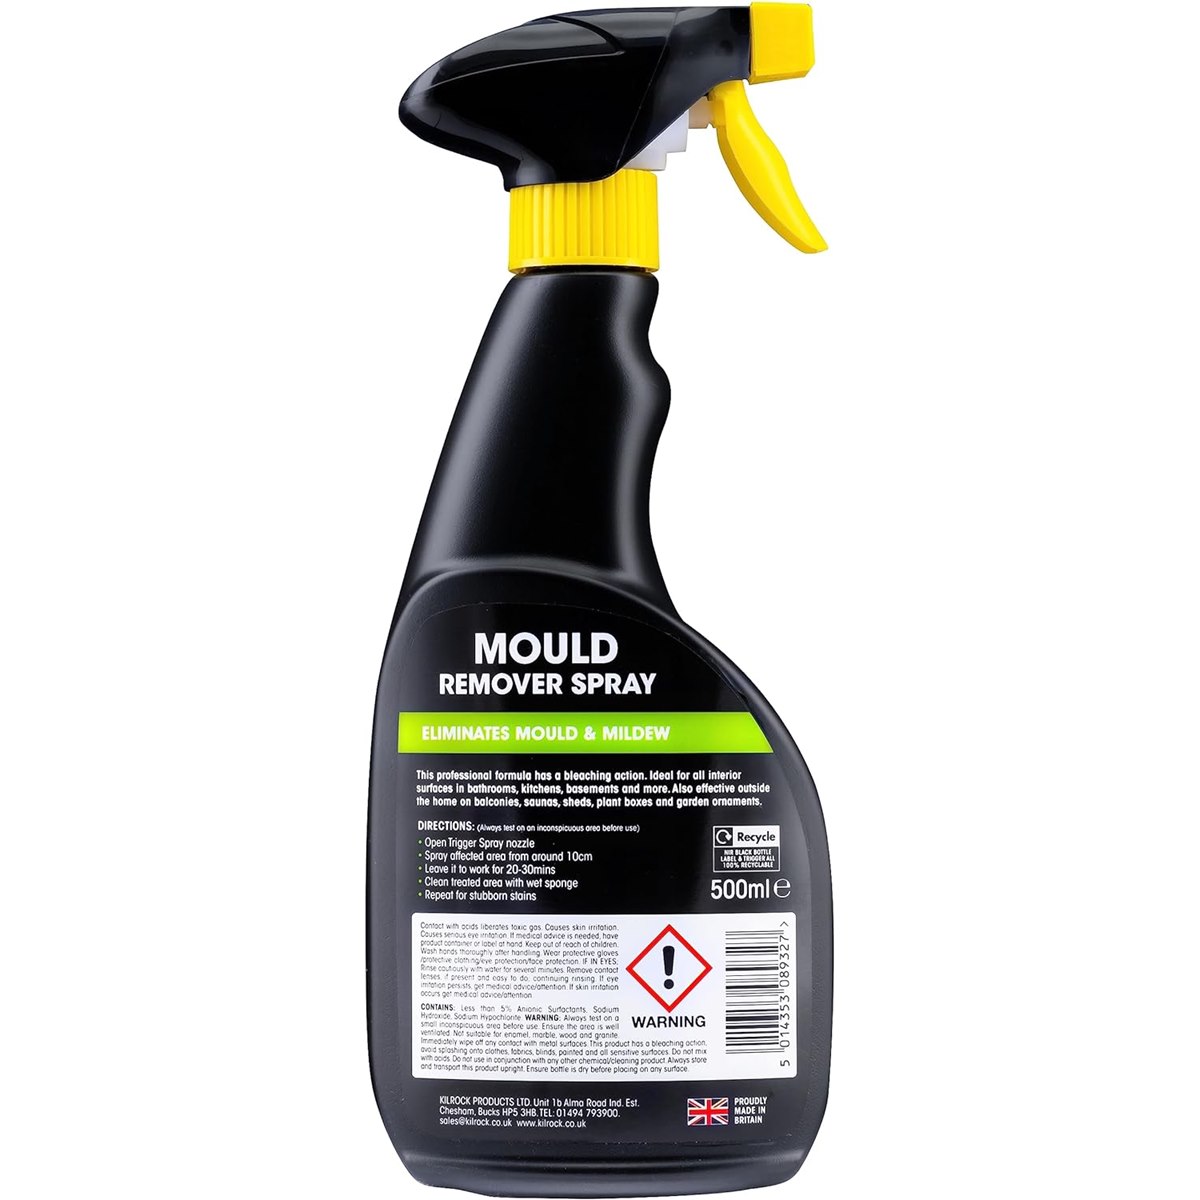 Kilrock Mould Remover Spray Instructions